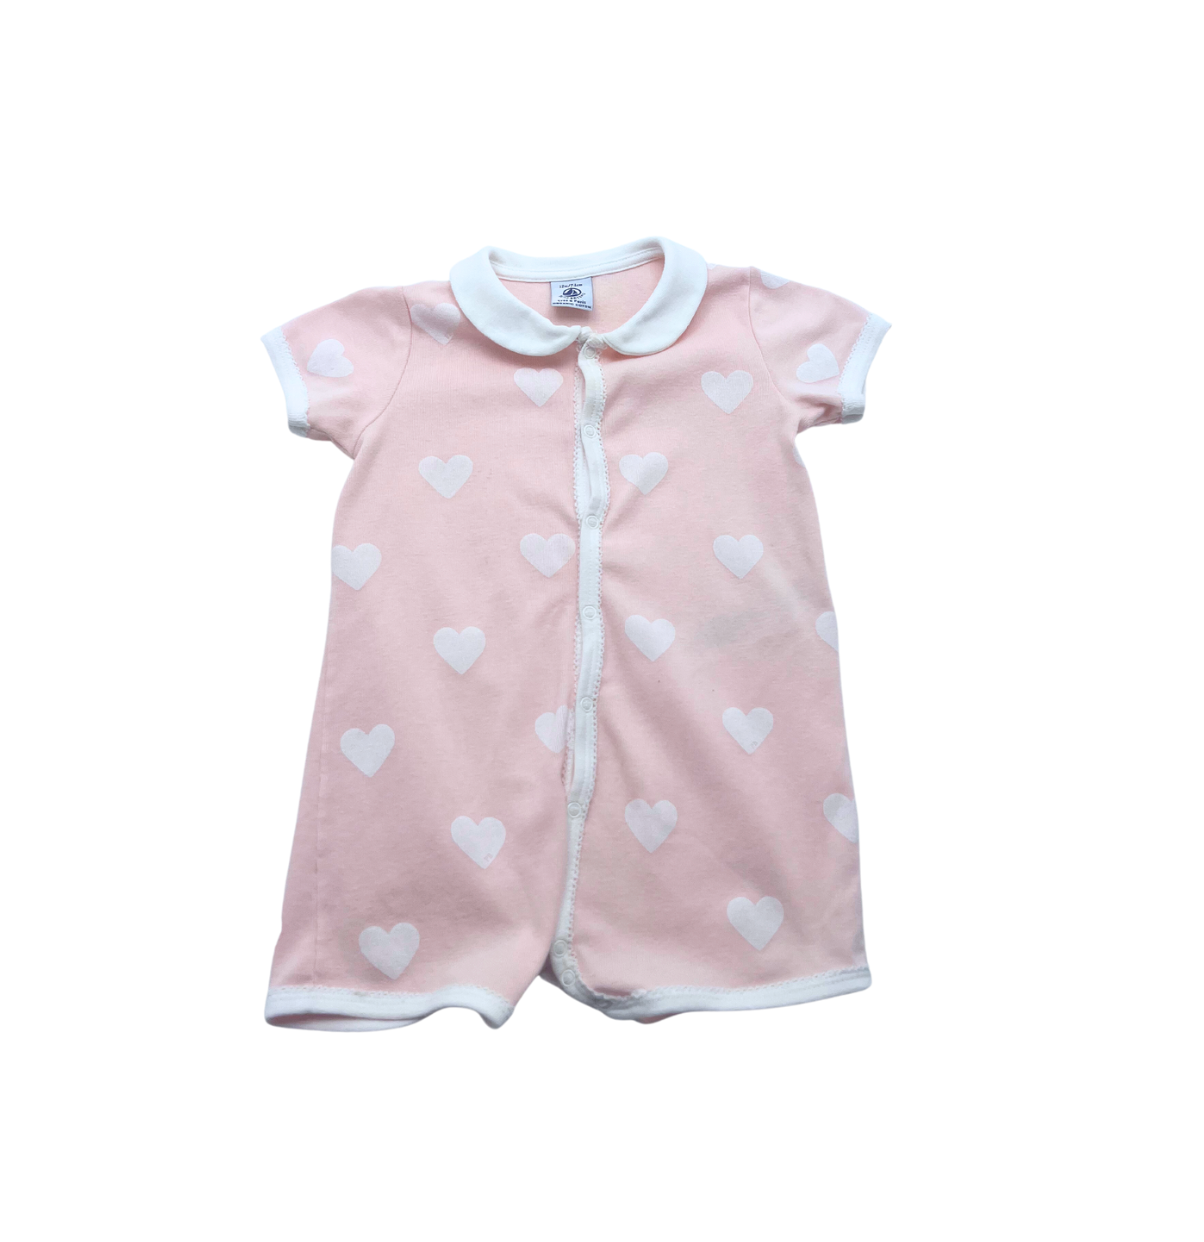 PETIT BATEAU - Pink pajamas with hearts - 12 months